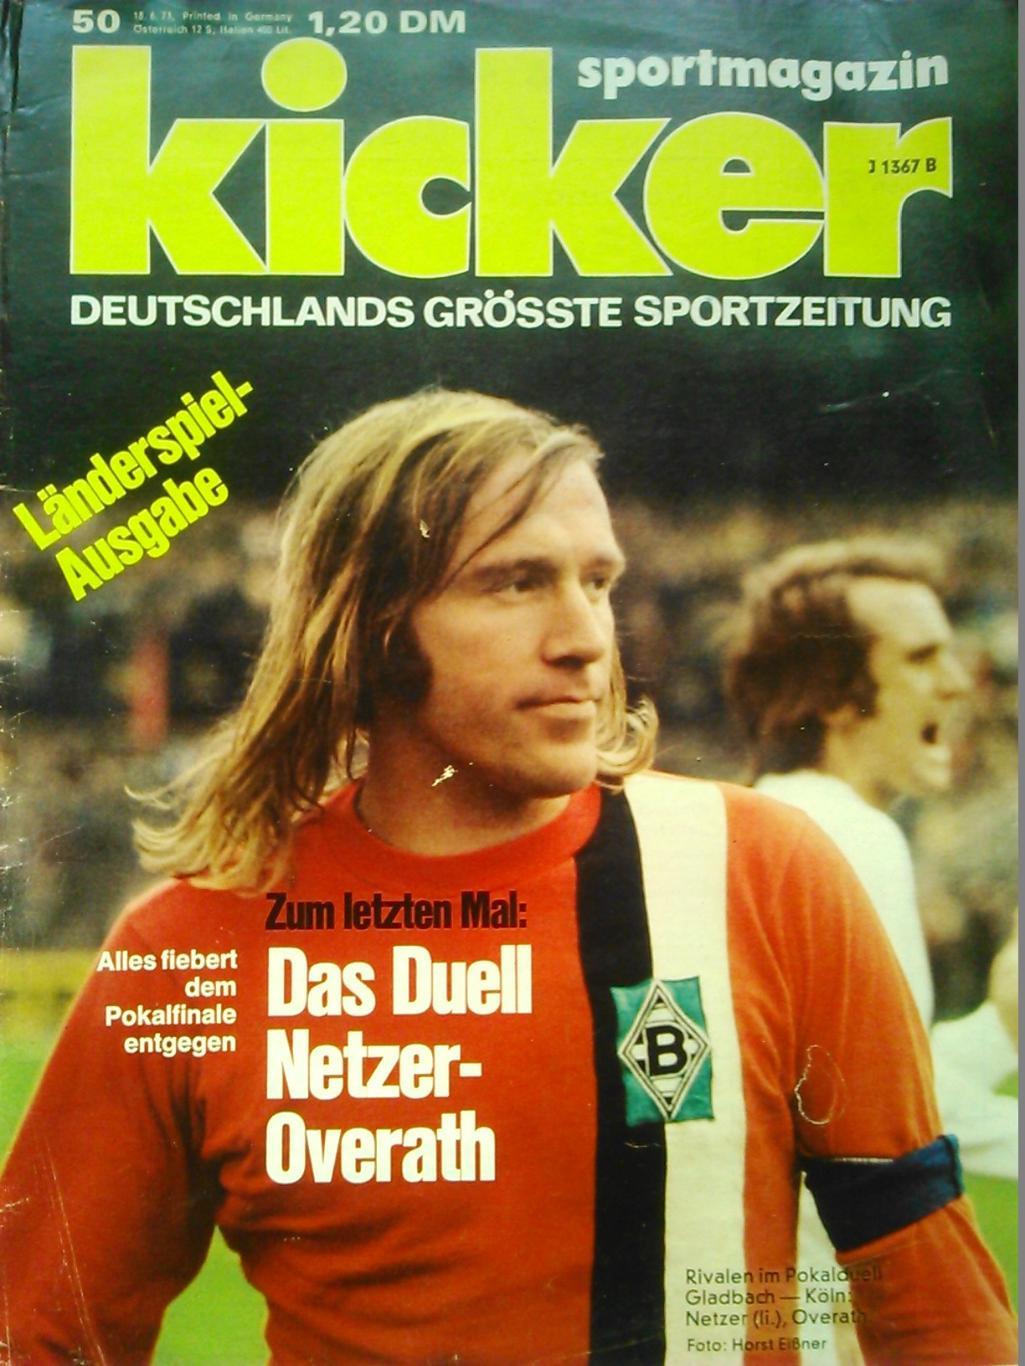 KICKER № 50 1973 (ФРГ) Футбол. Спорт. Автомагазин ст. 62-73. Оптом скидки 46%